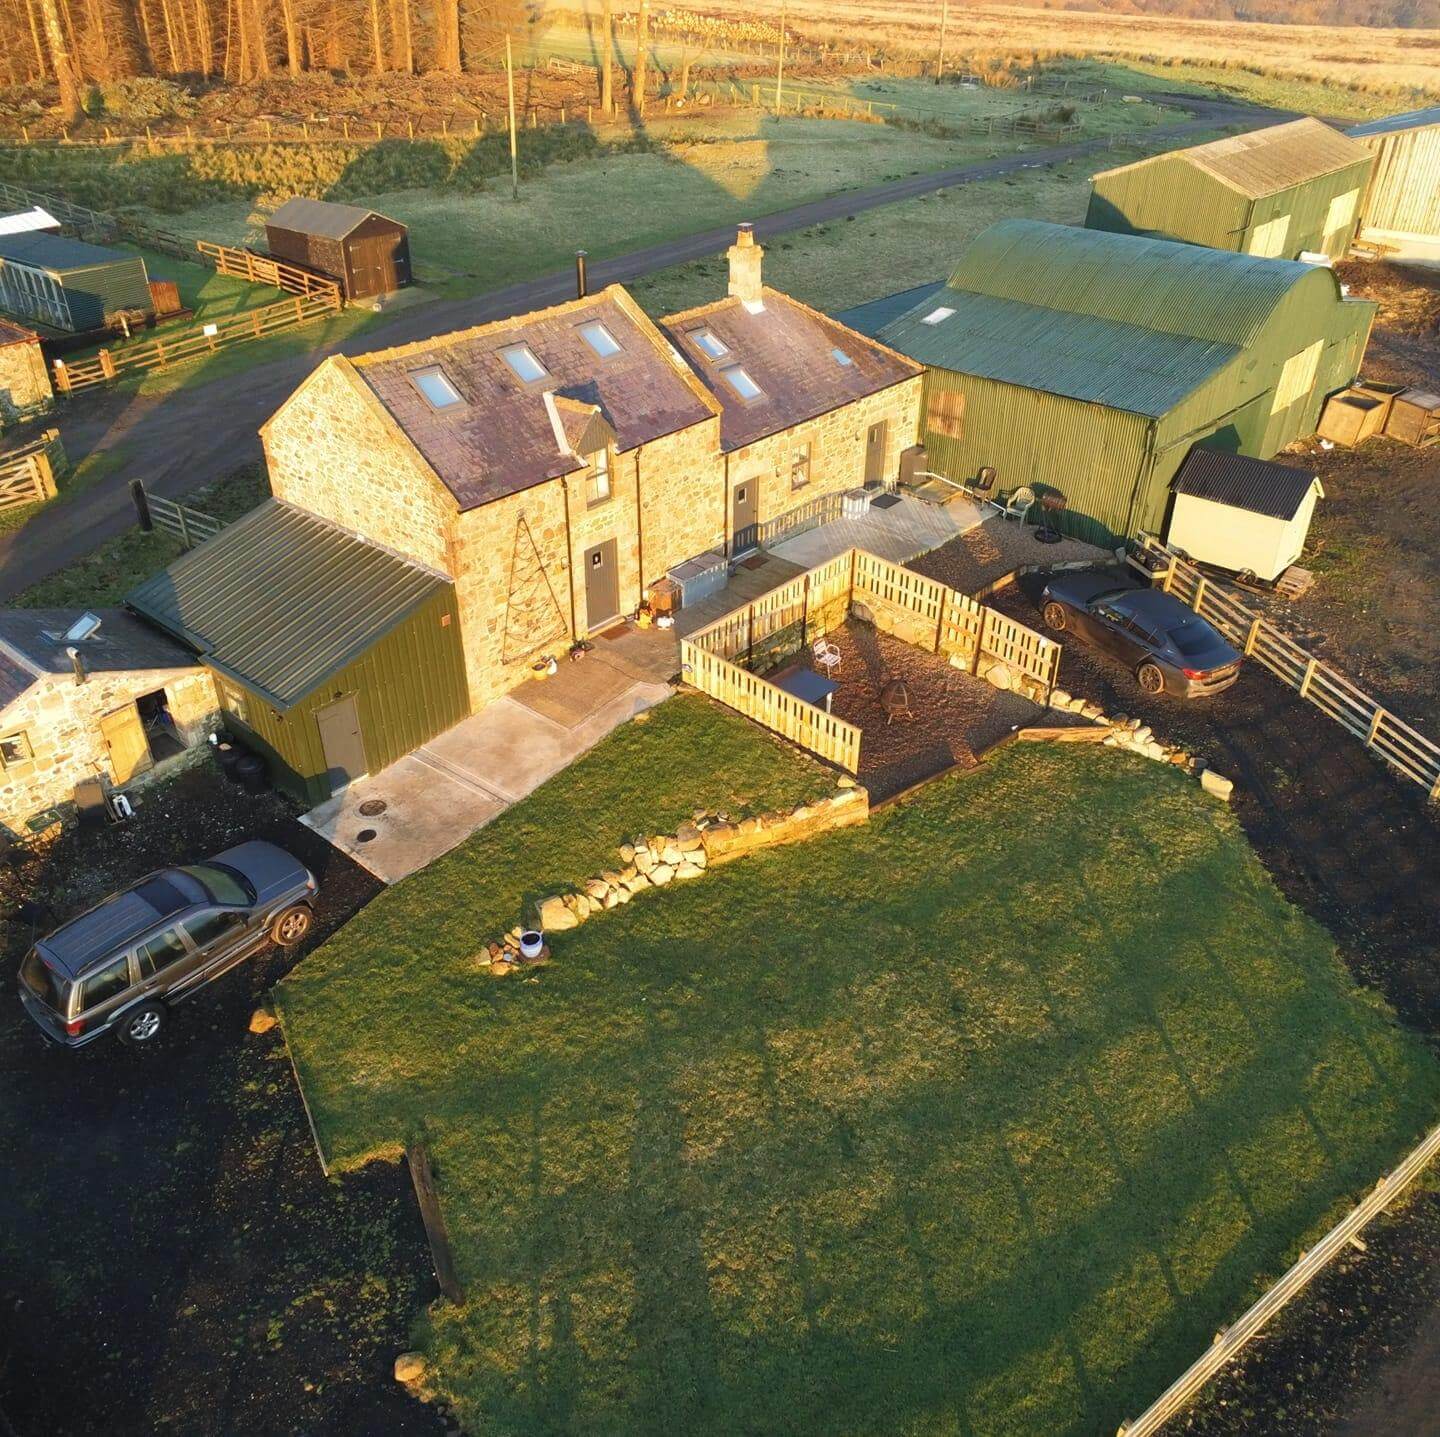 Ilderton Dod Barns, Northumberland